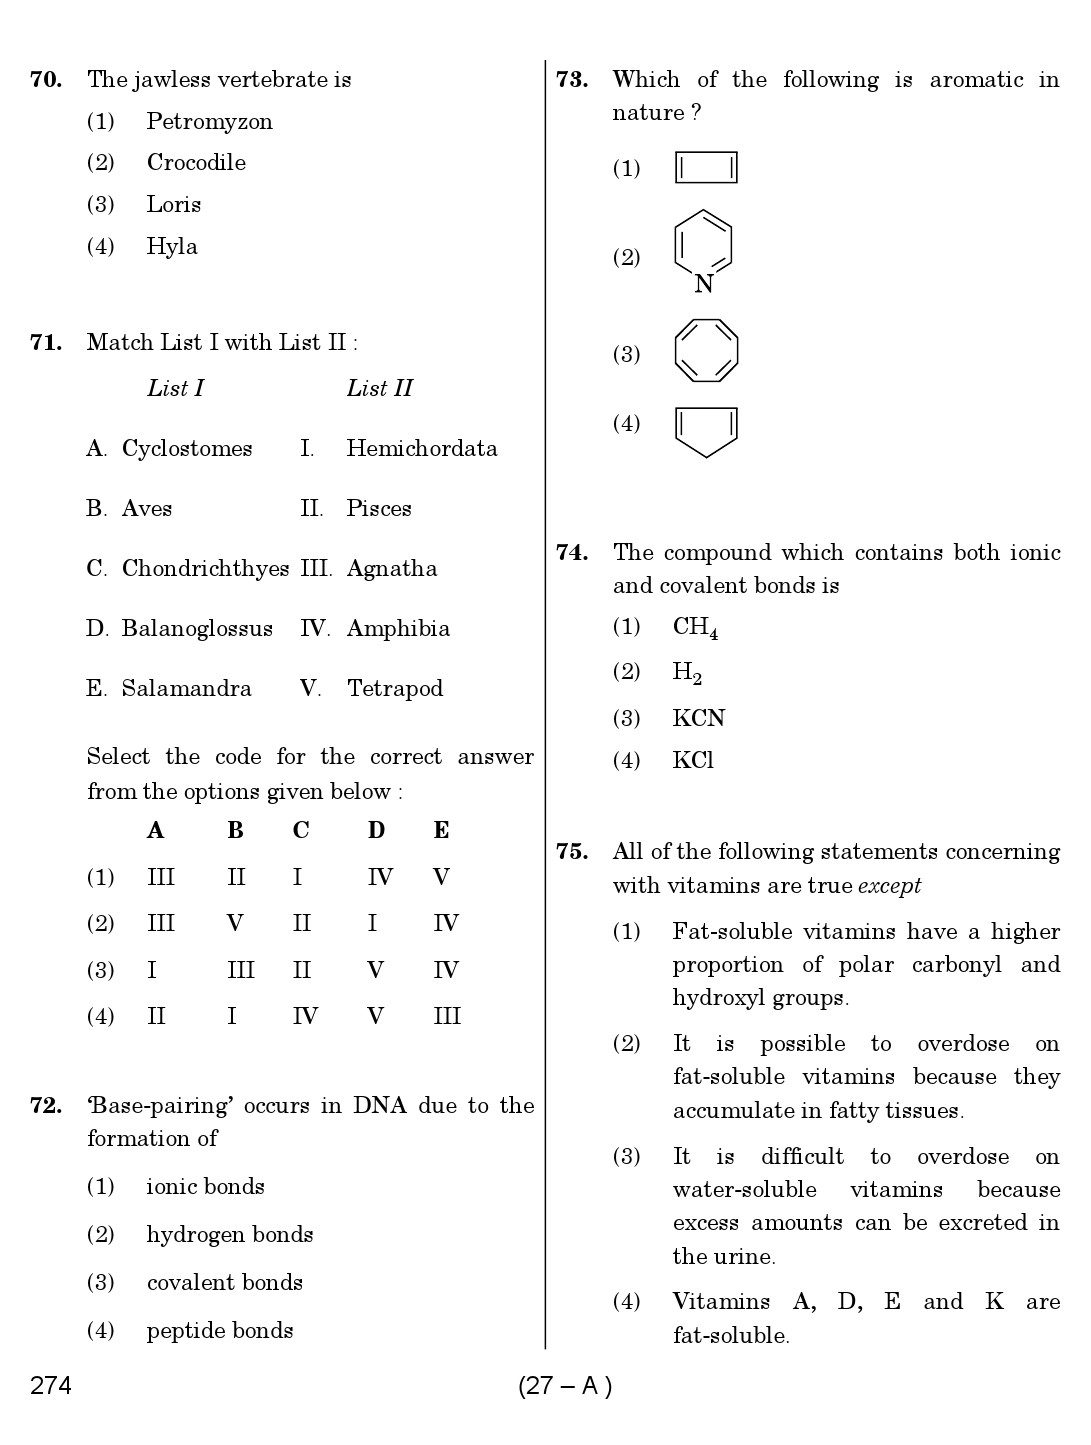 Karnataka PSC Science Teacher Exam Sample Question Paper Subject code 274 27